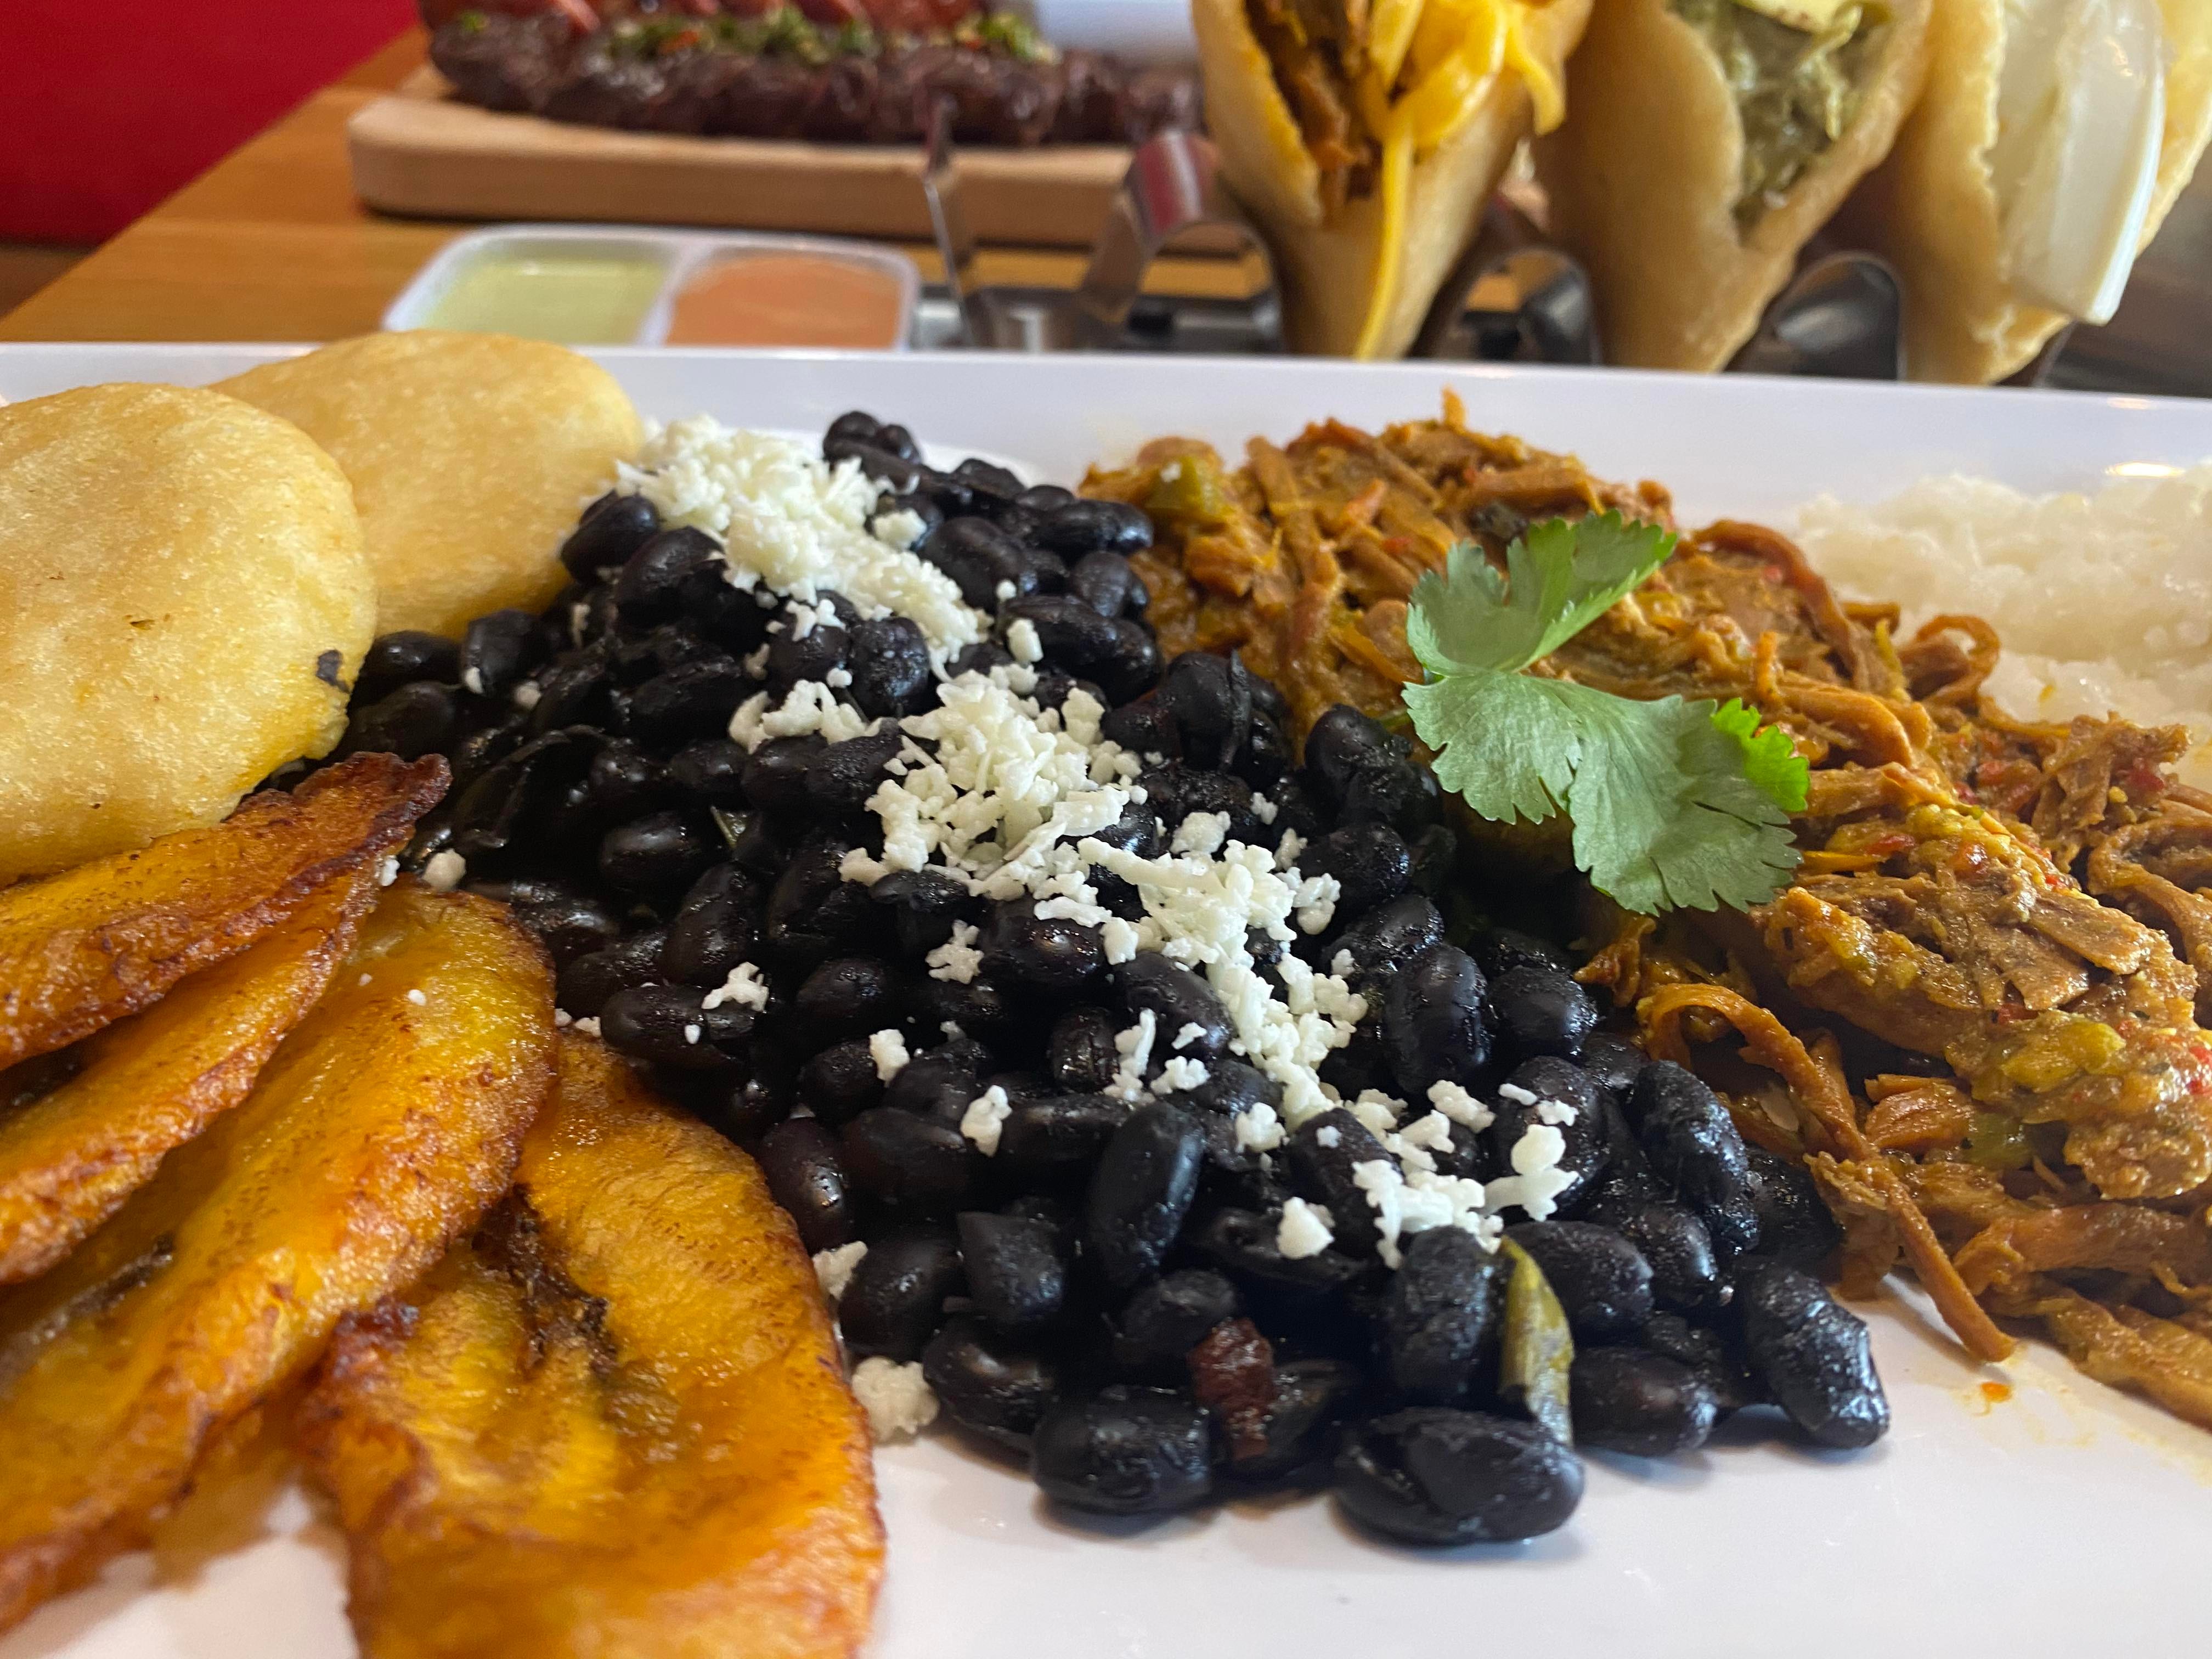 Arepa Grill features Venezuelan cuisine in Doraville, Georgia